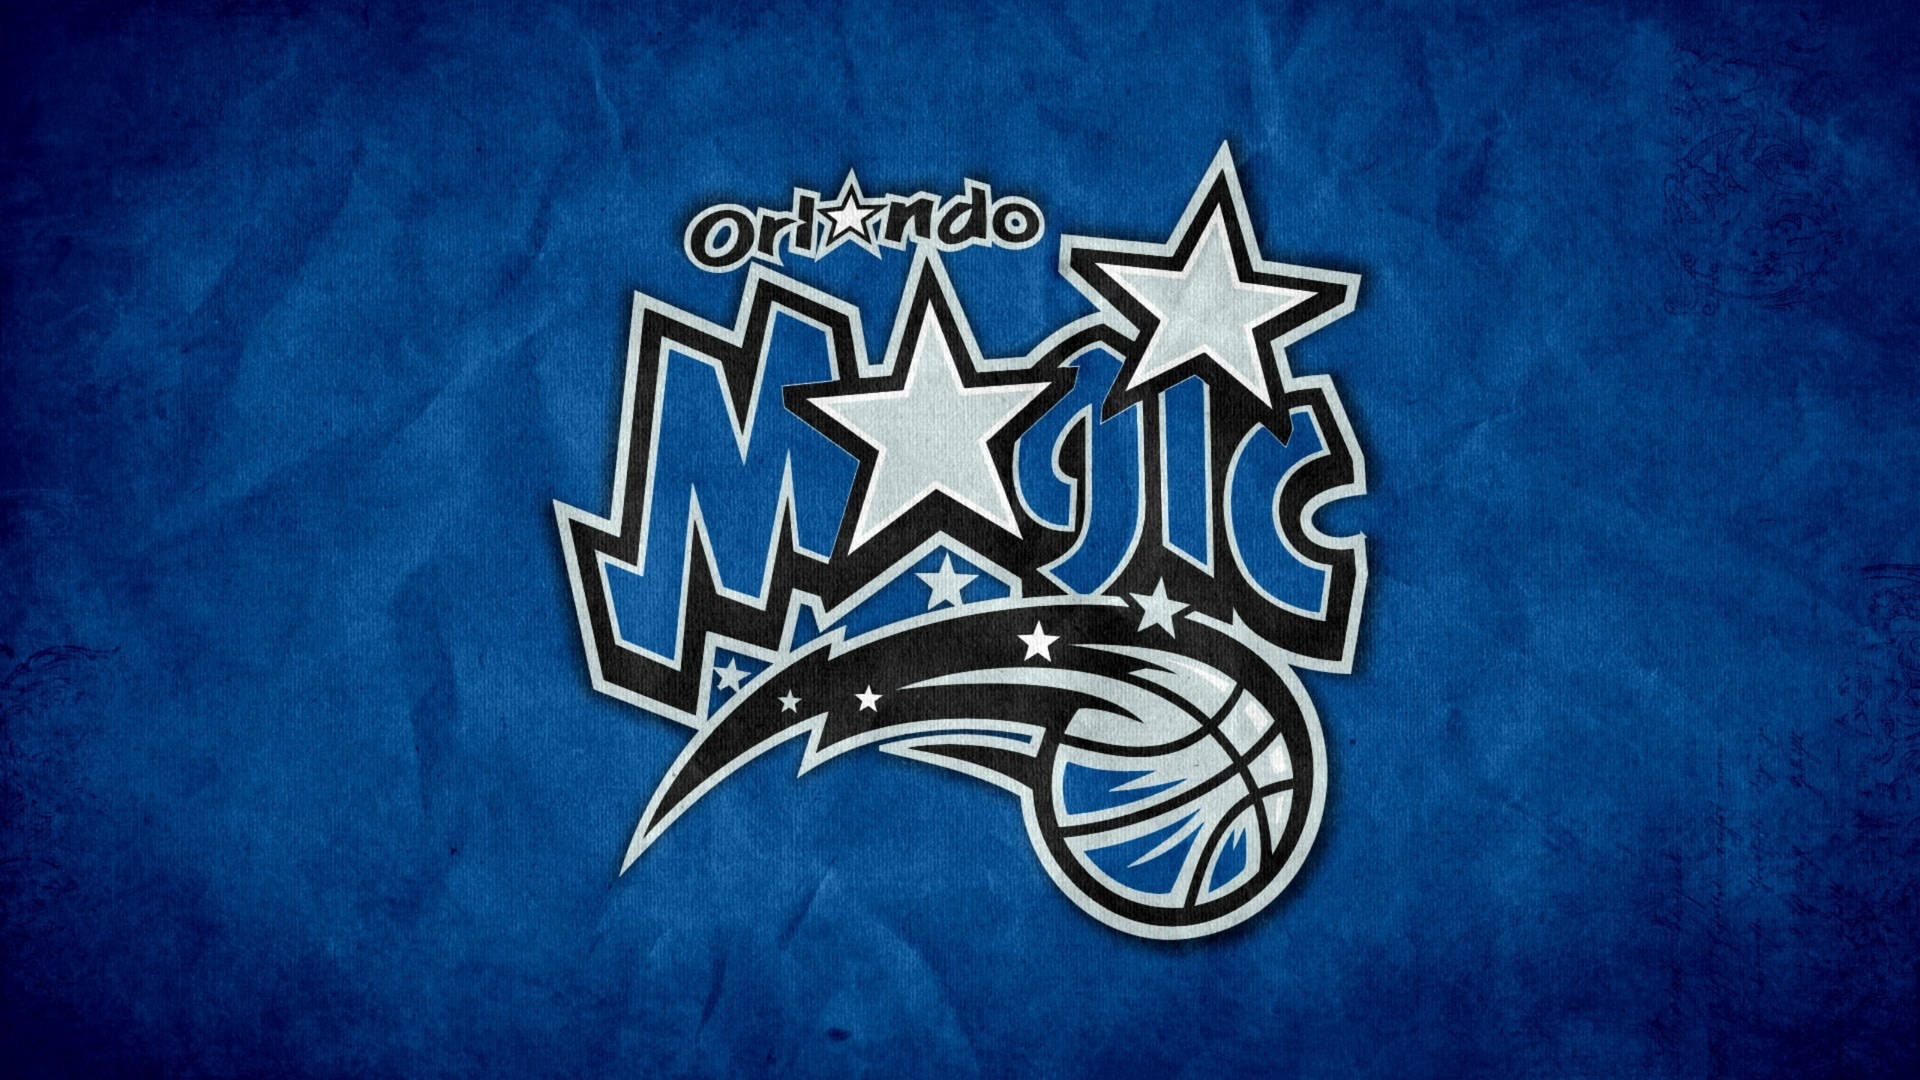 Orlando Magic Franchise Logo In Blue